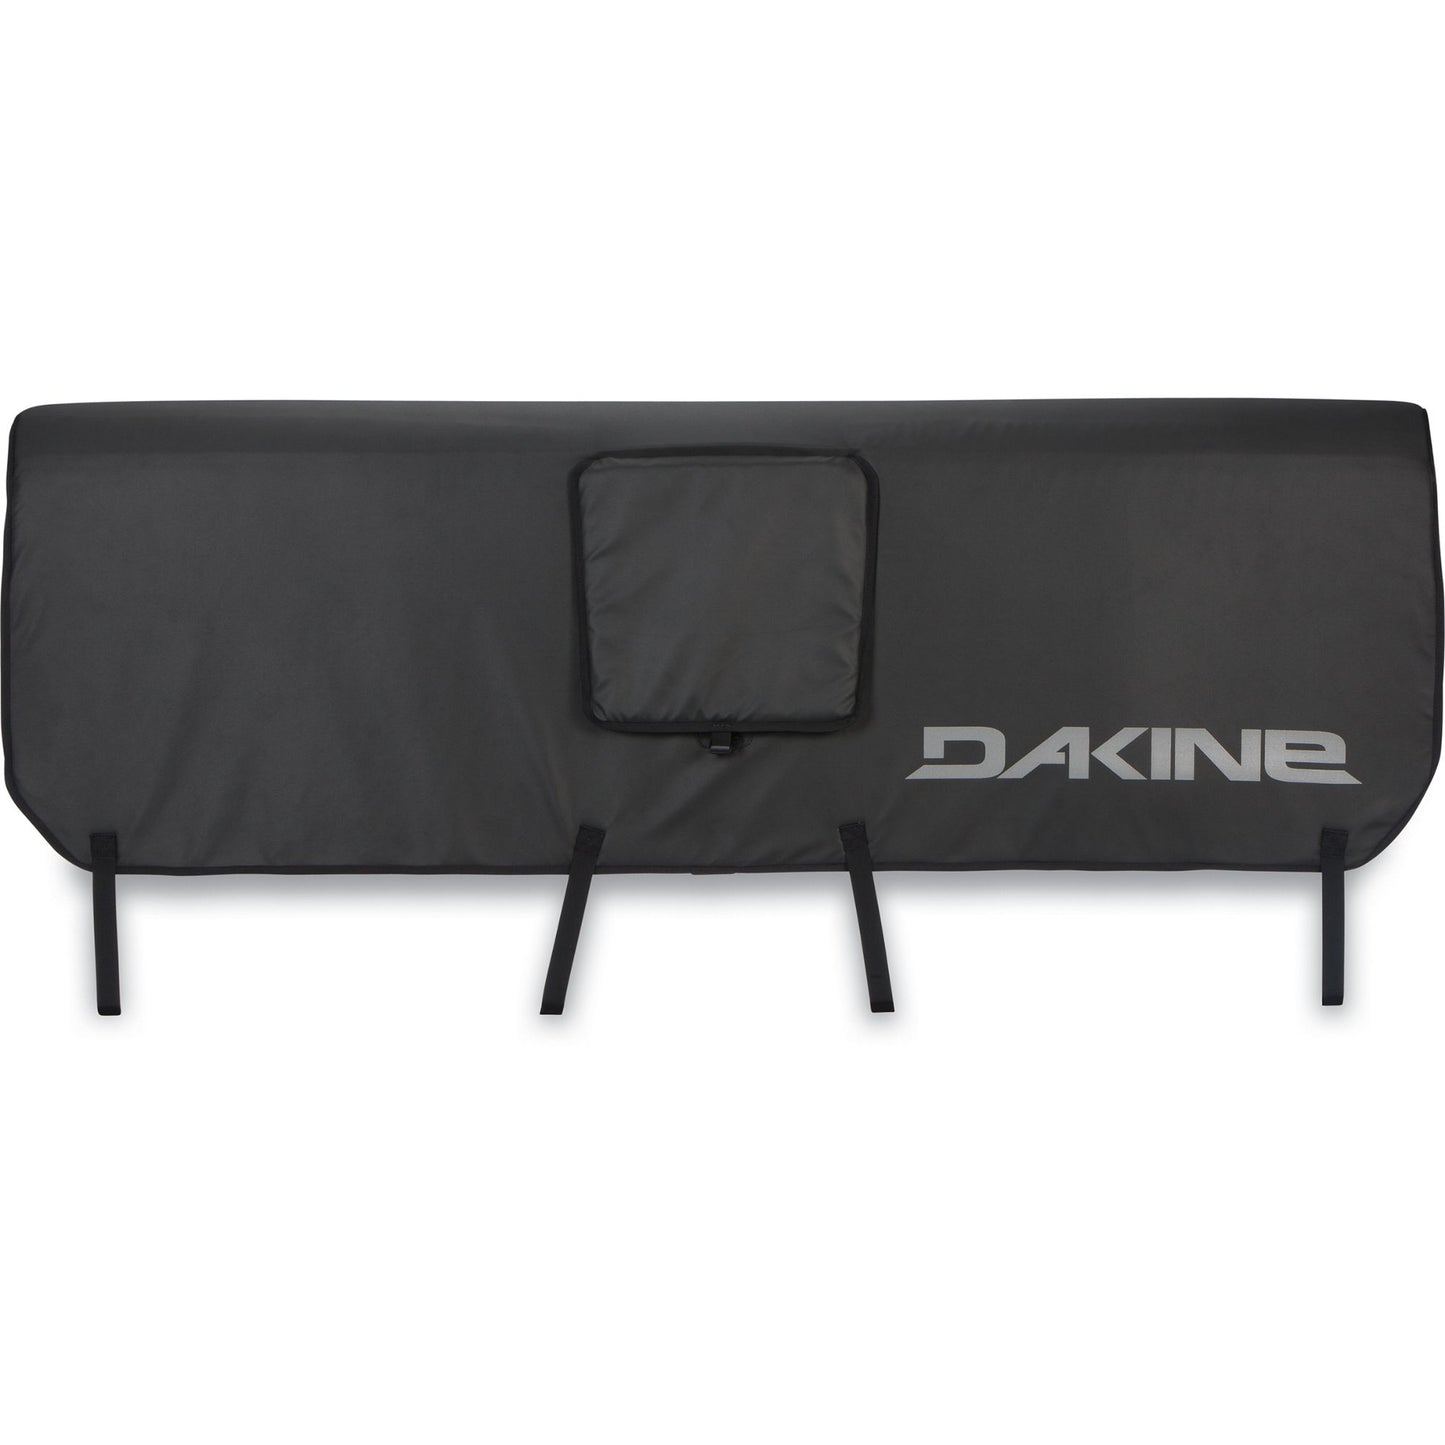 Dakine Pickup Pad DLX Black Tailgate Pads